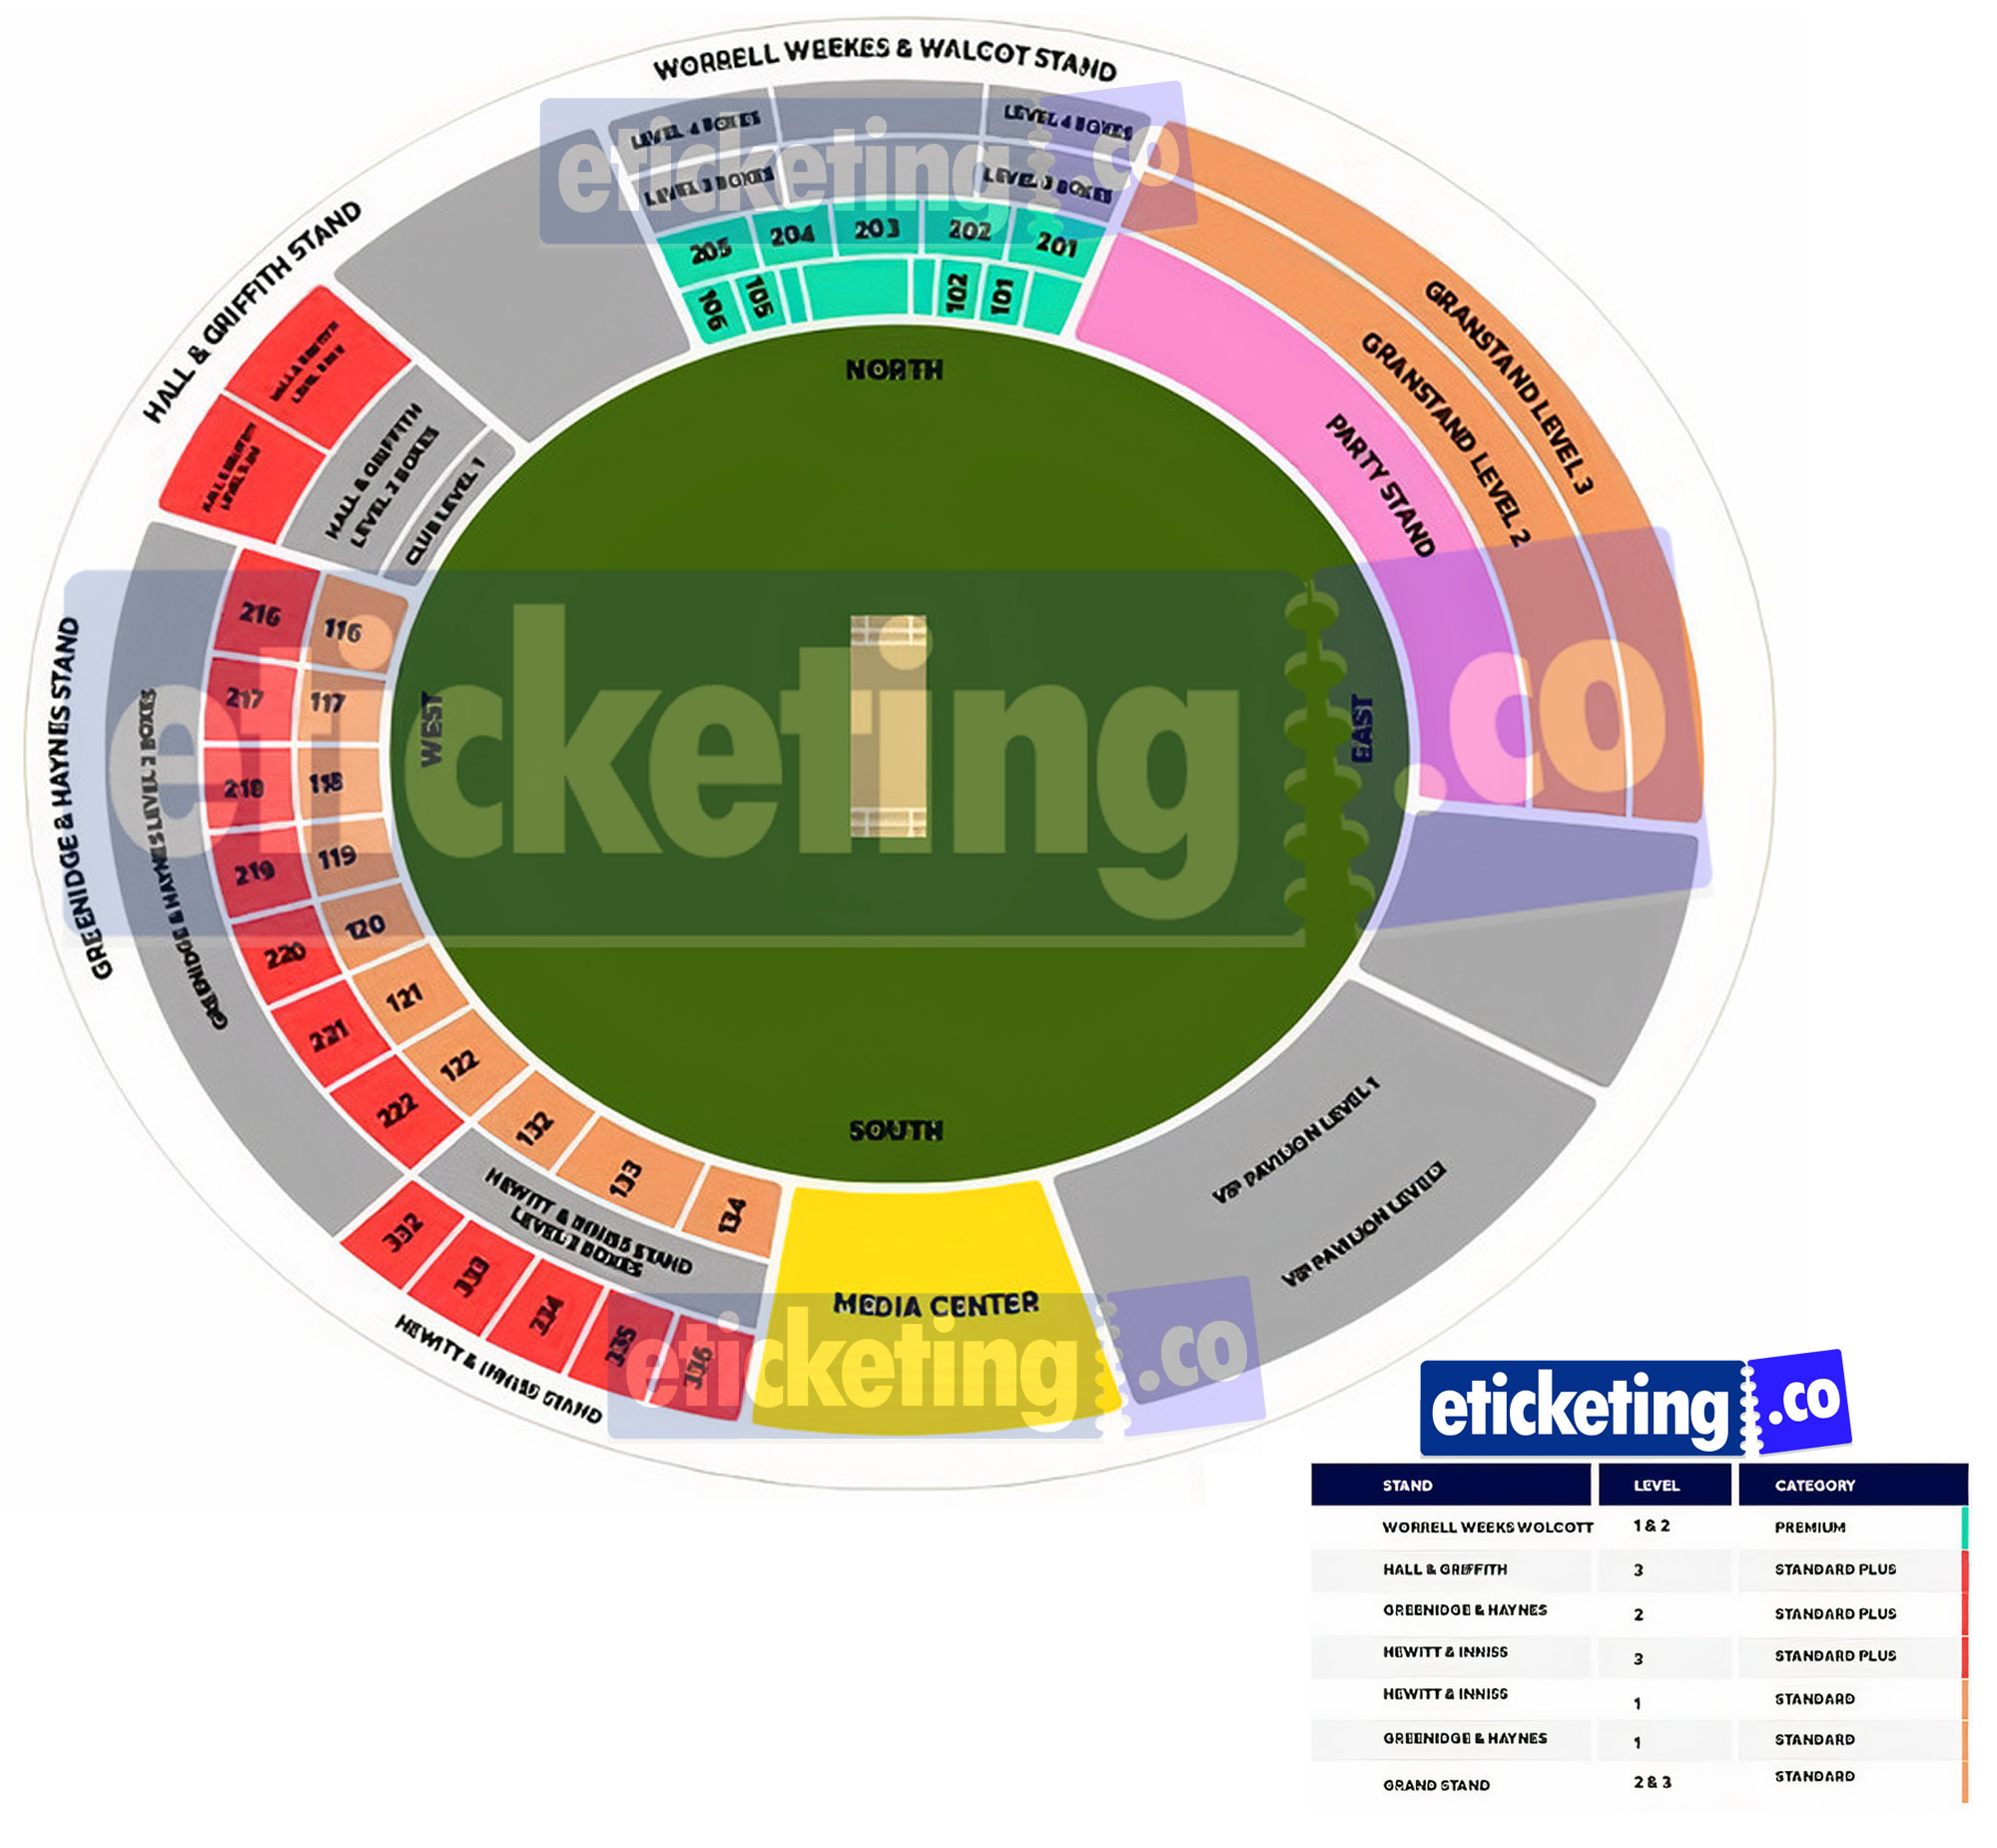 Kensington Oval England vs Scotland Venue Seating Plan